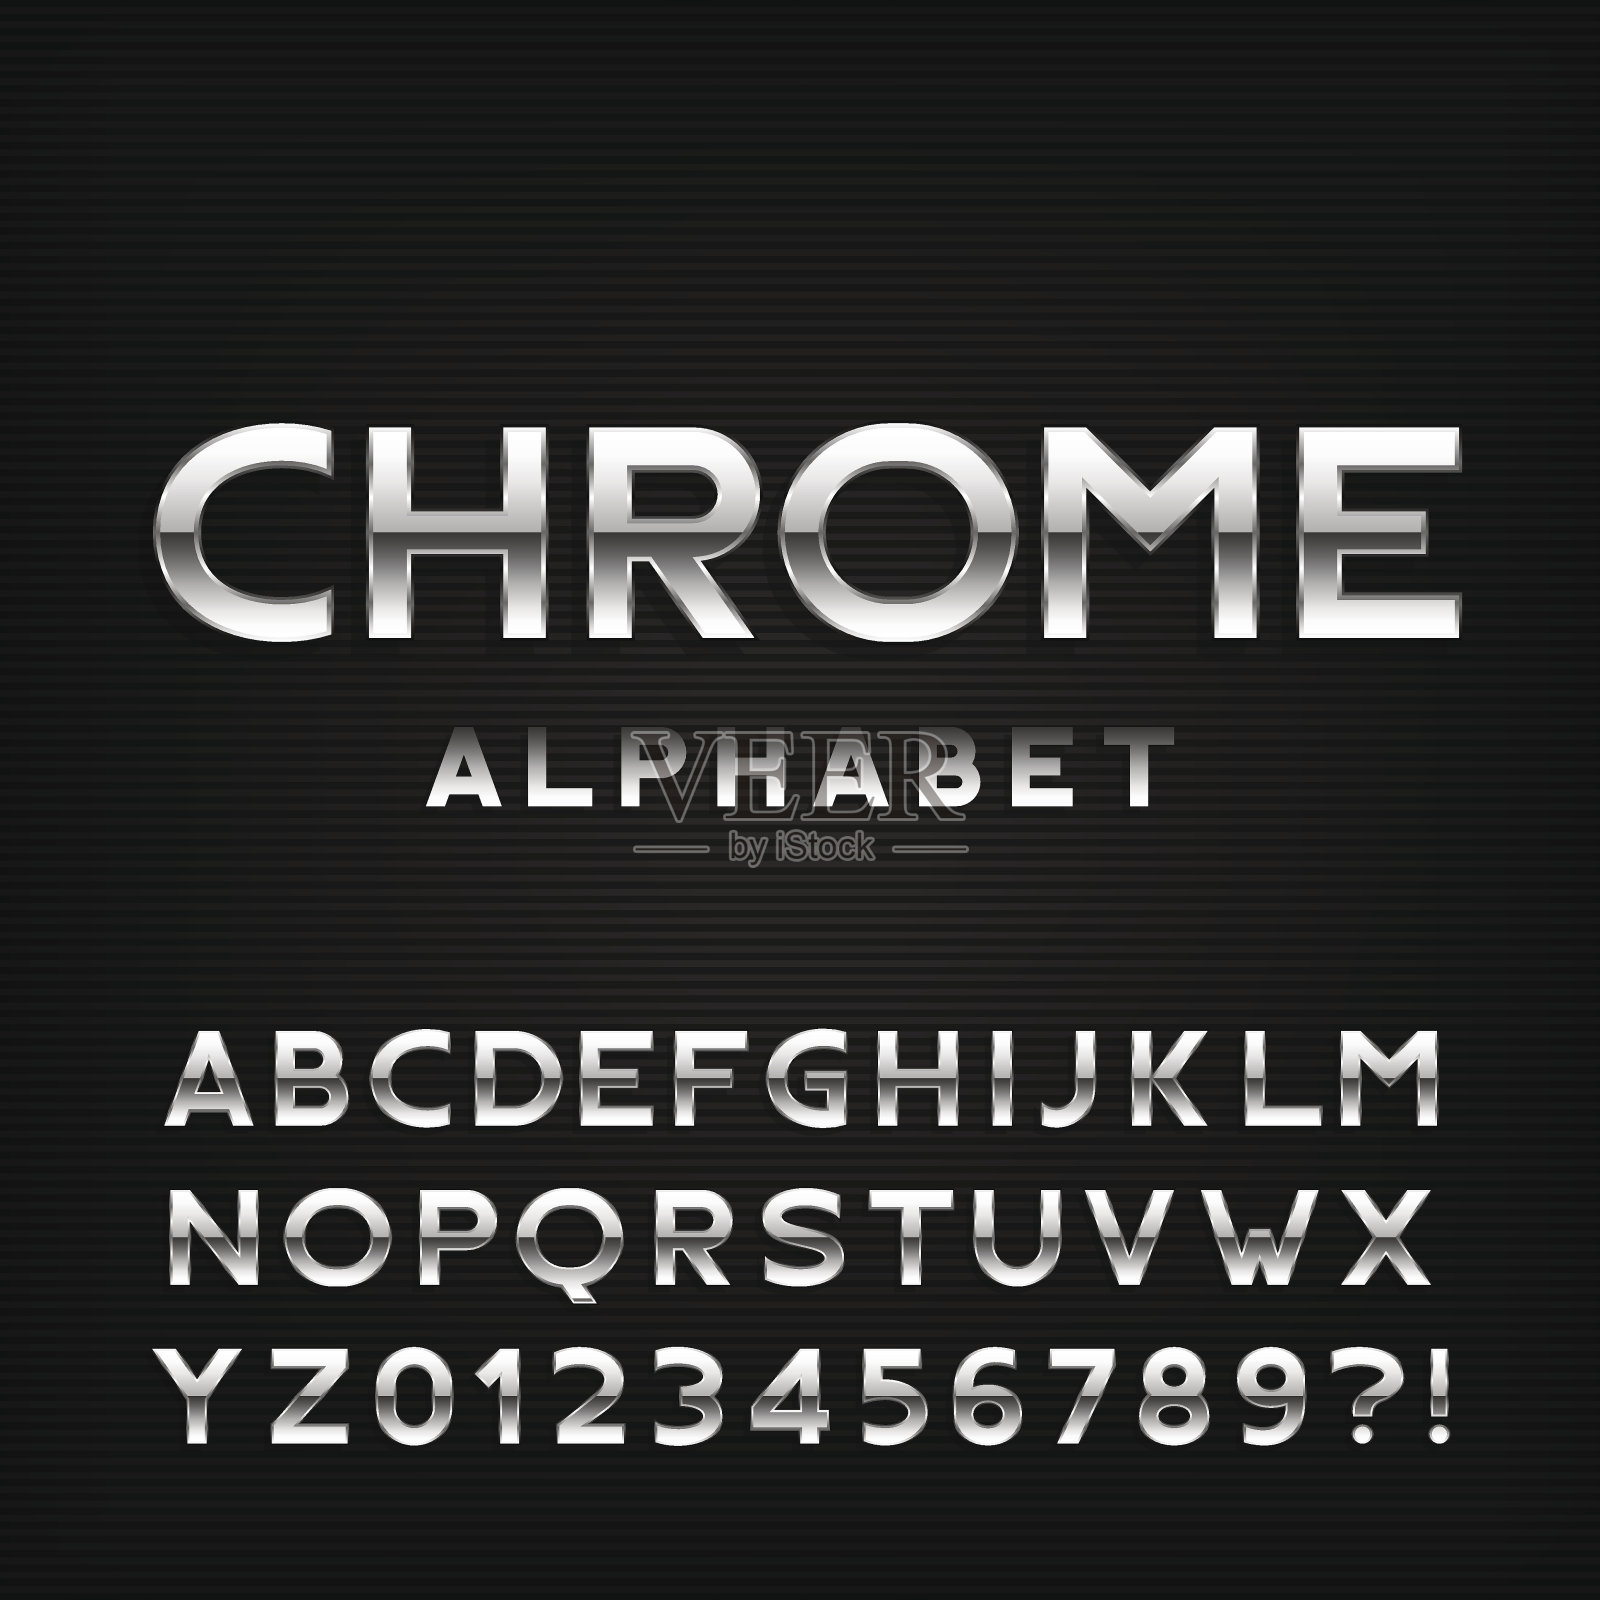 Chrome字母字体。金属效应字母和数字。设计元素图片